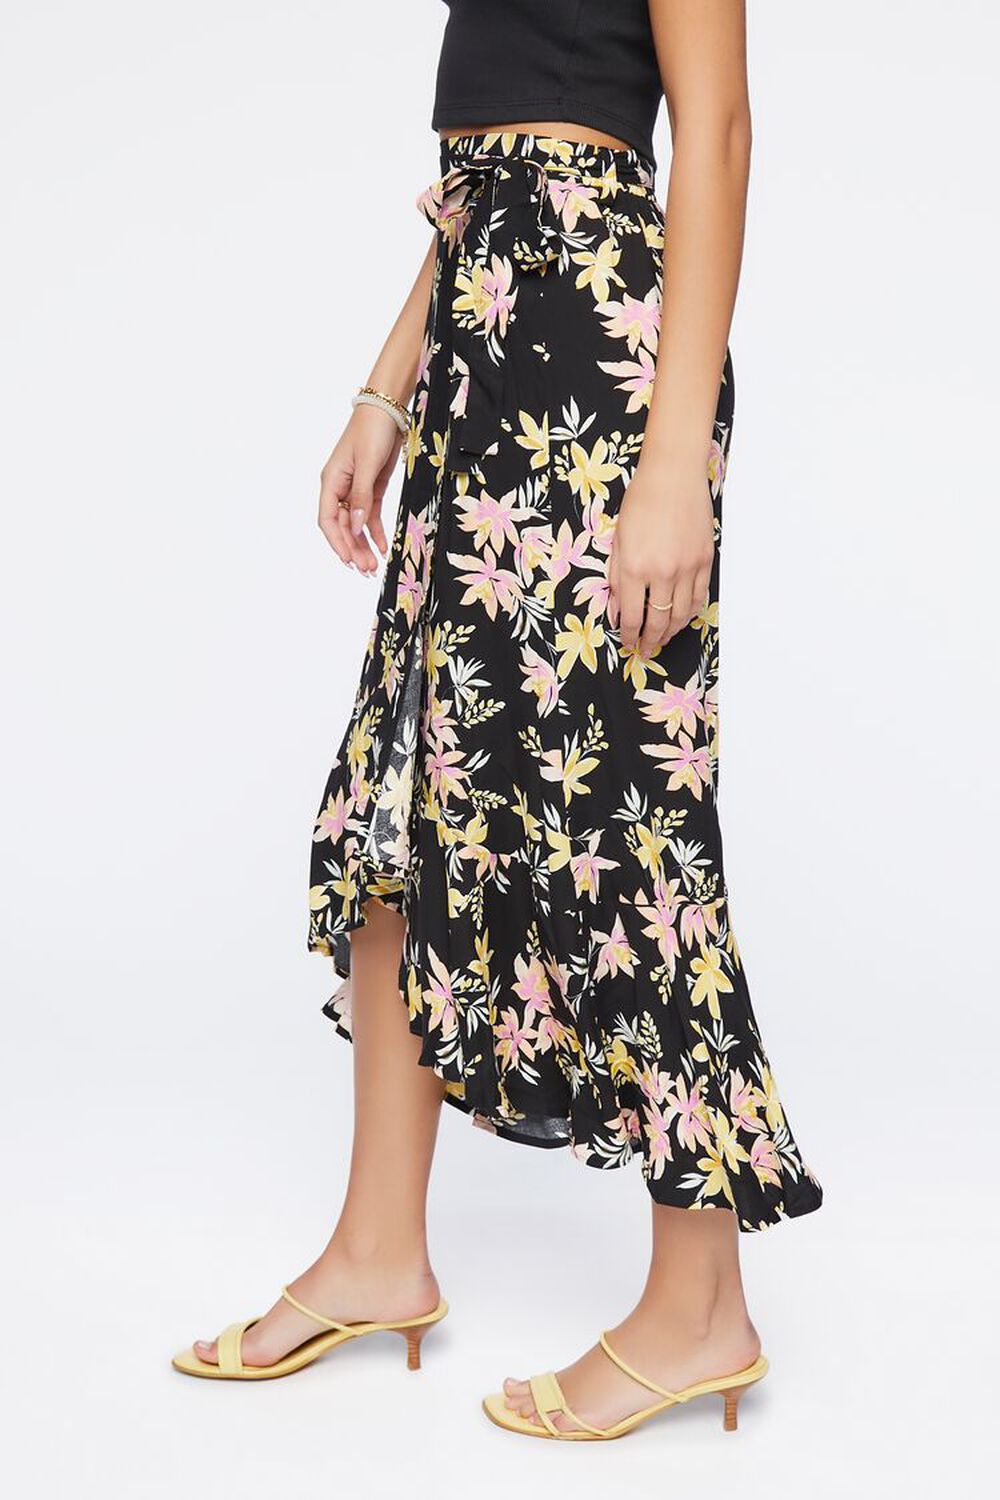 BLACK/MULTI Floral Print High-Low Skirt, image 3